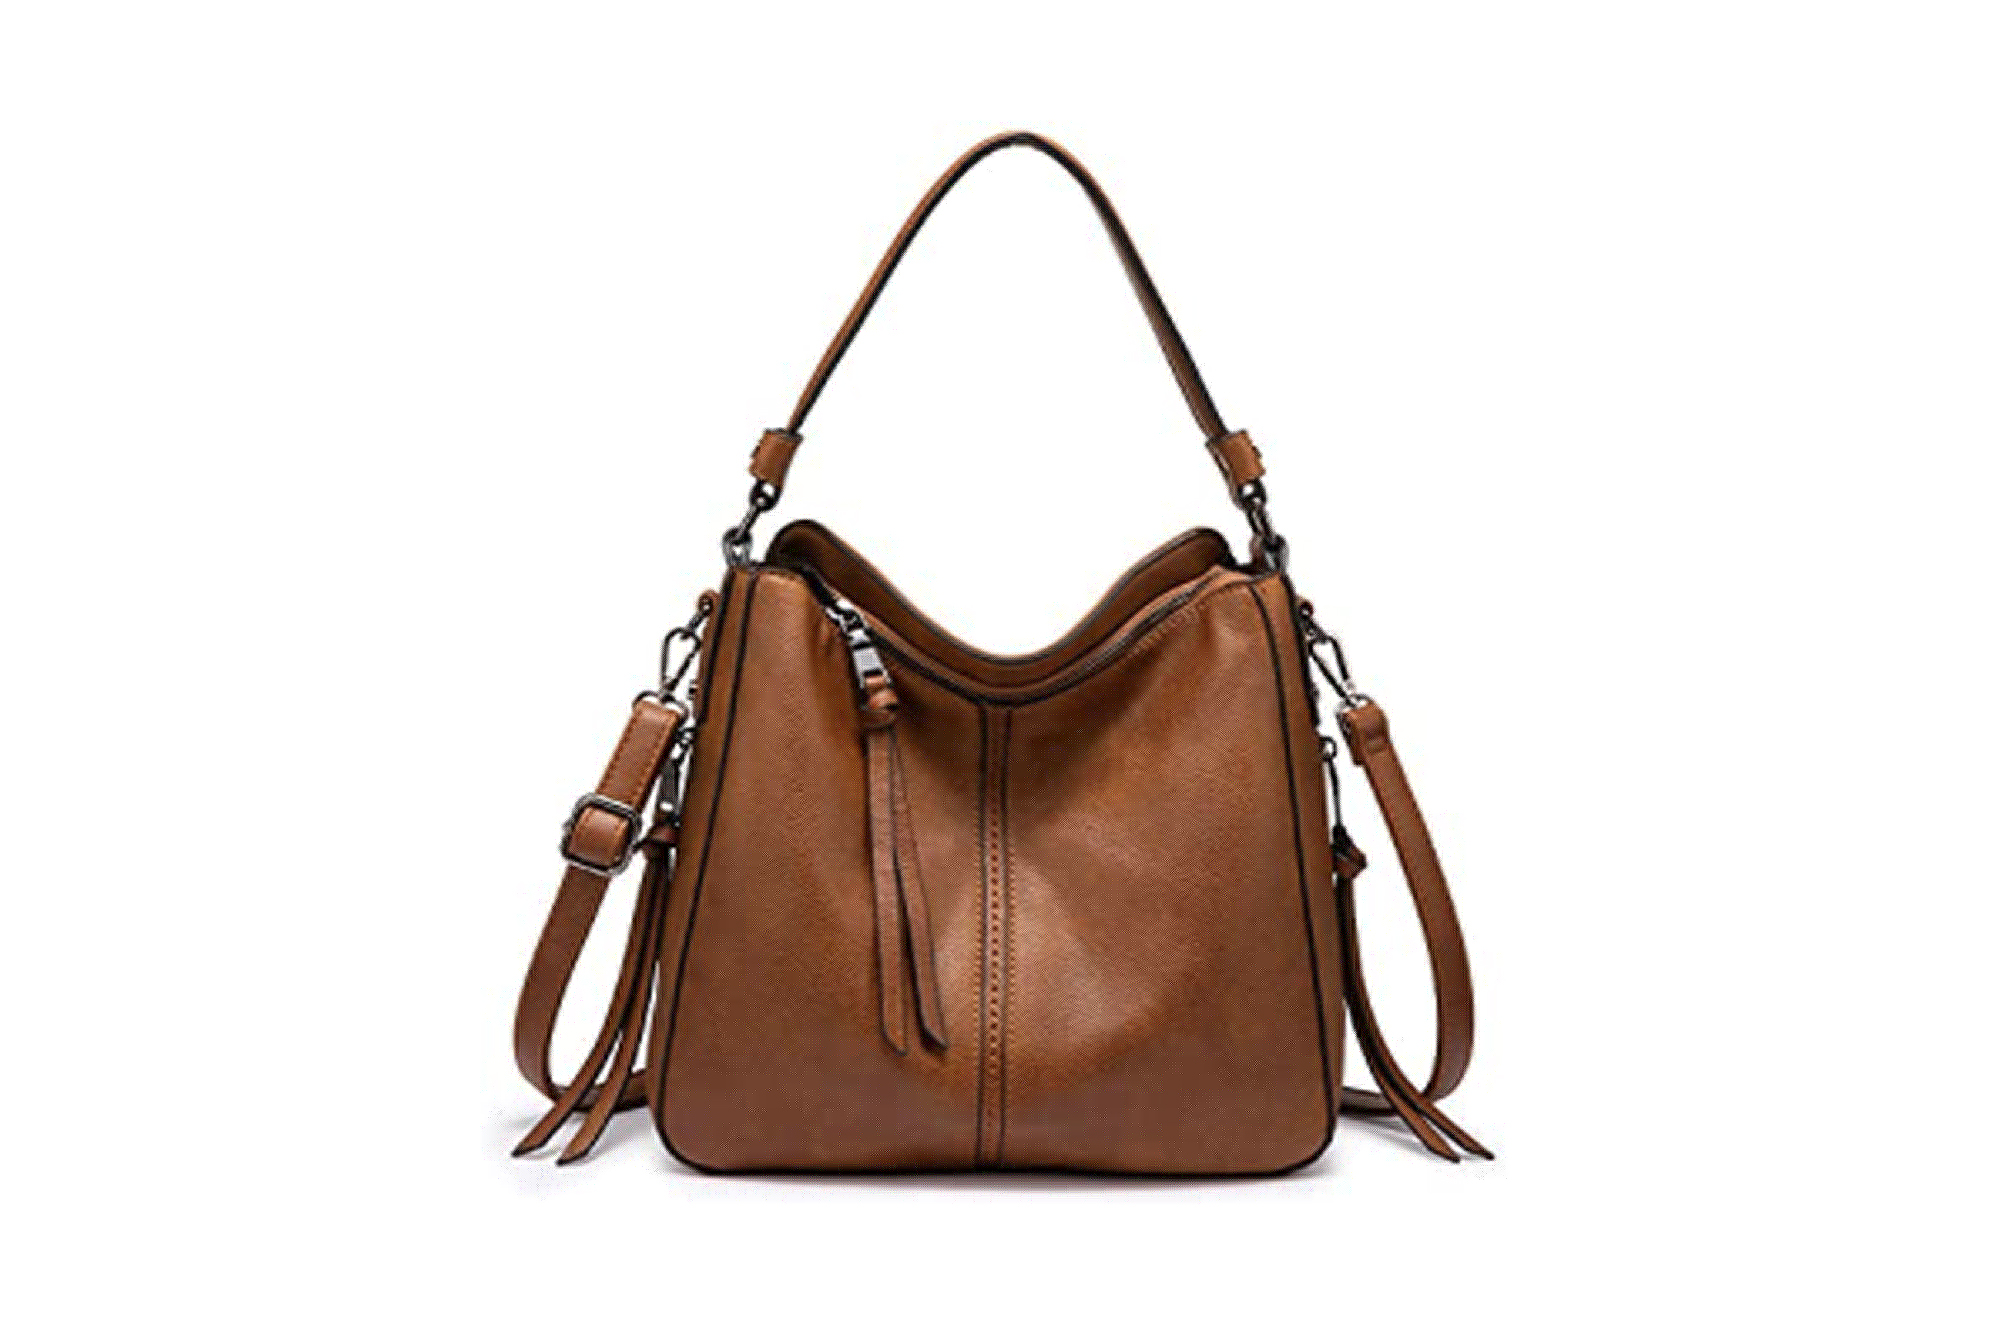 Realer Hobo Handbags for Women Shoulder Hobo Bags 3 Purse Sets